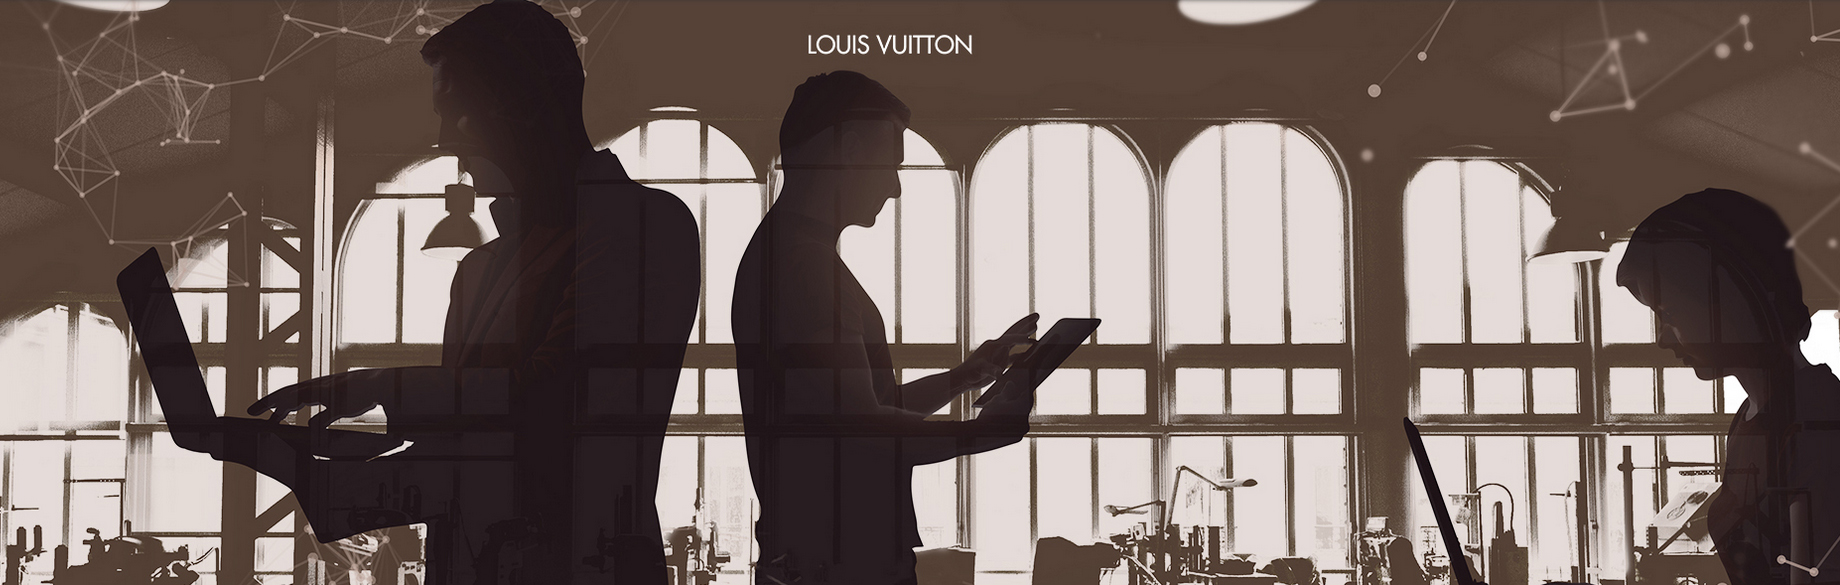 Unlock Operations Vuitton